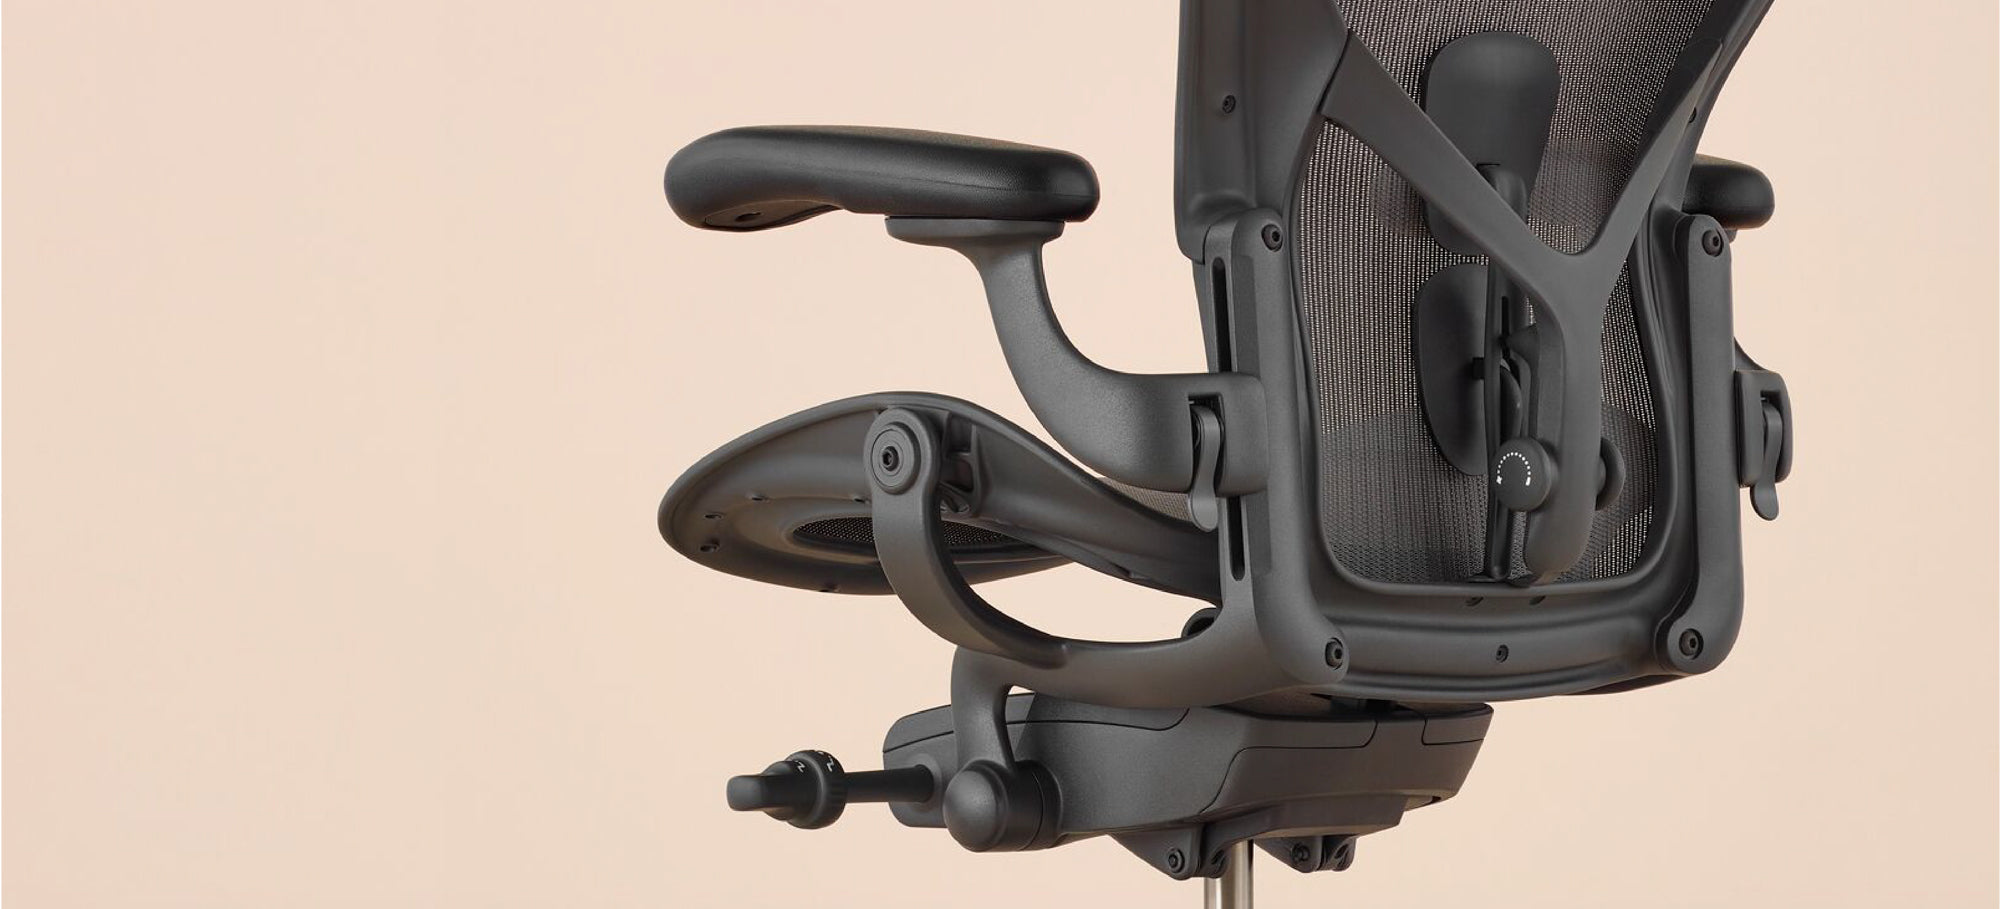 Aeron Chair Features